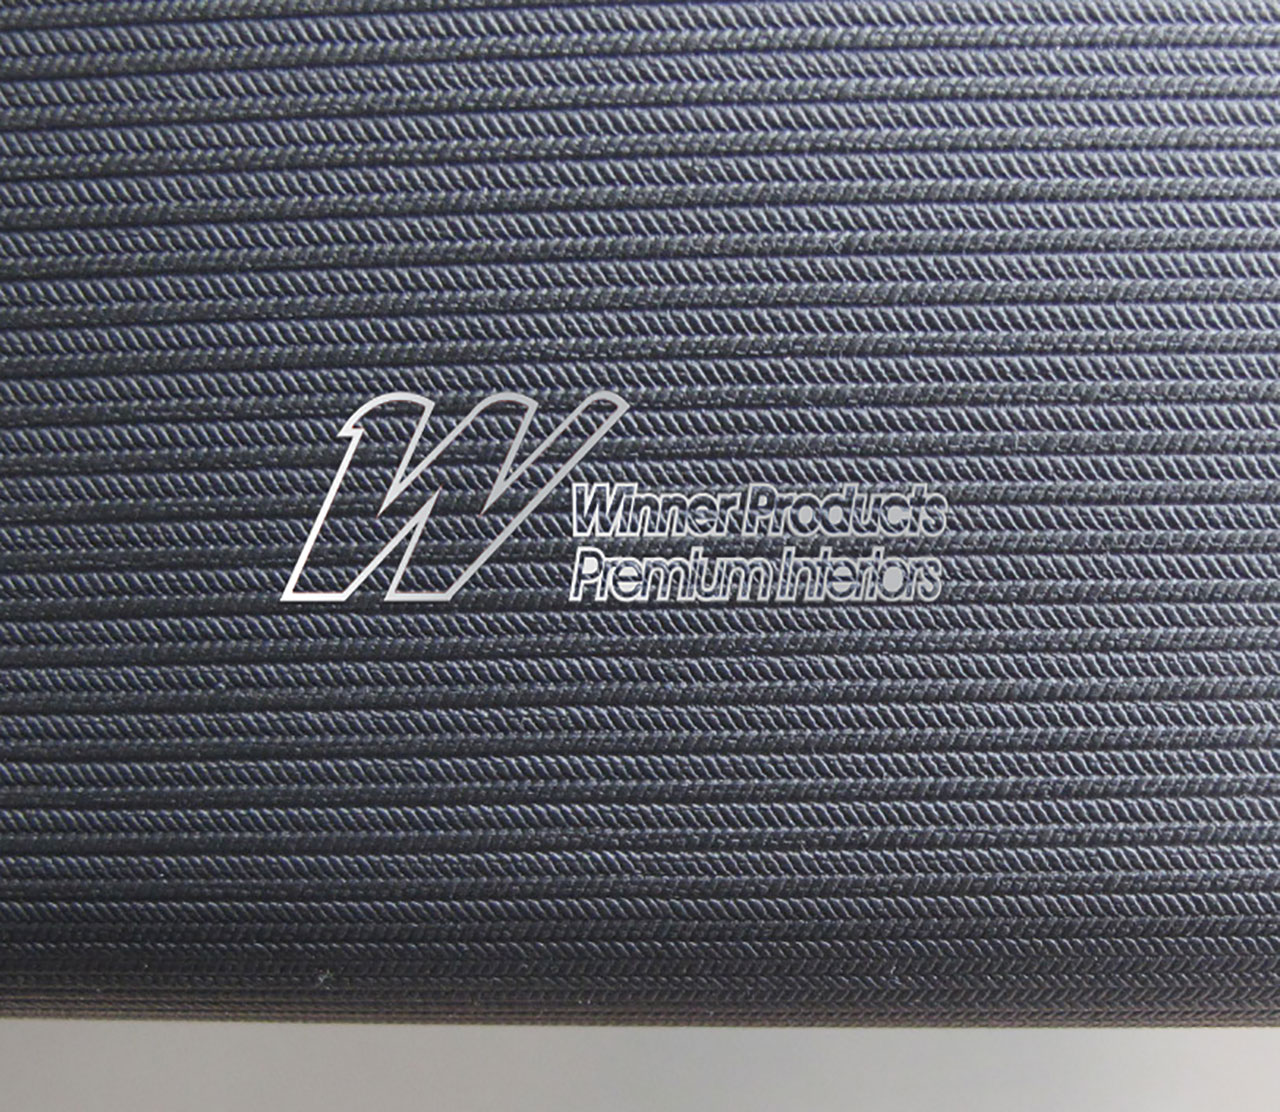 Holden Kingswood HQ Kingswood Wagon Sep72-Mar73 10G Black & Cloth Sun Visors (Image 3 of 3)